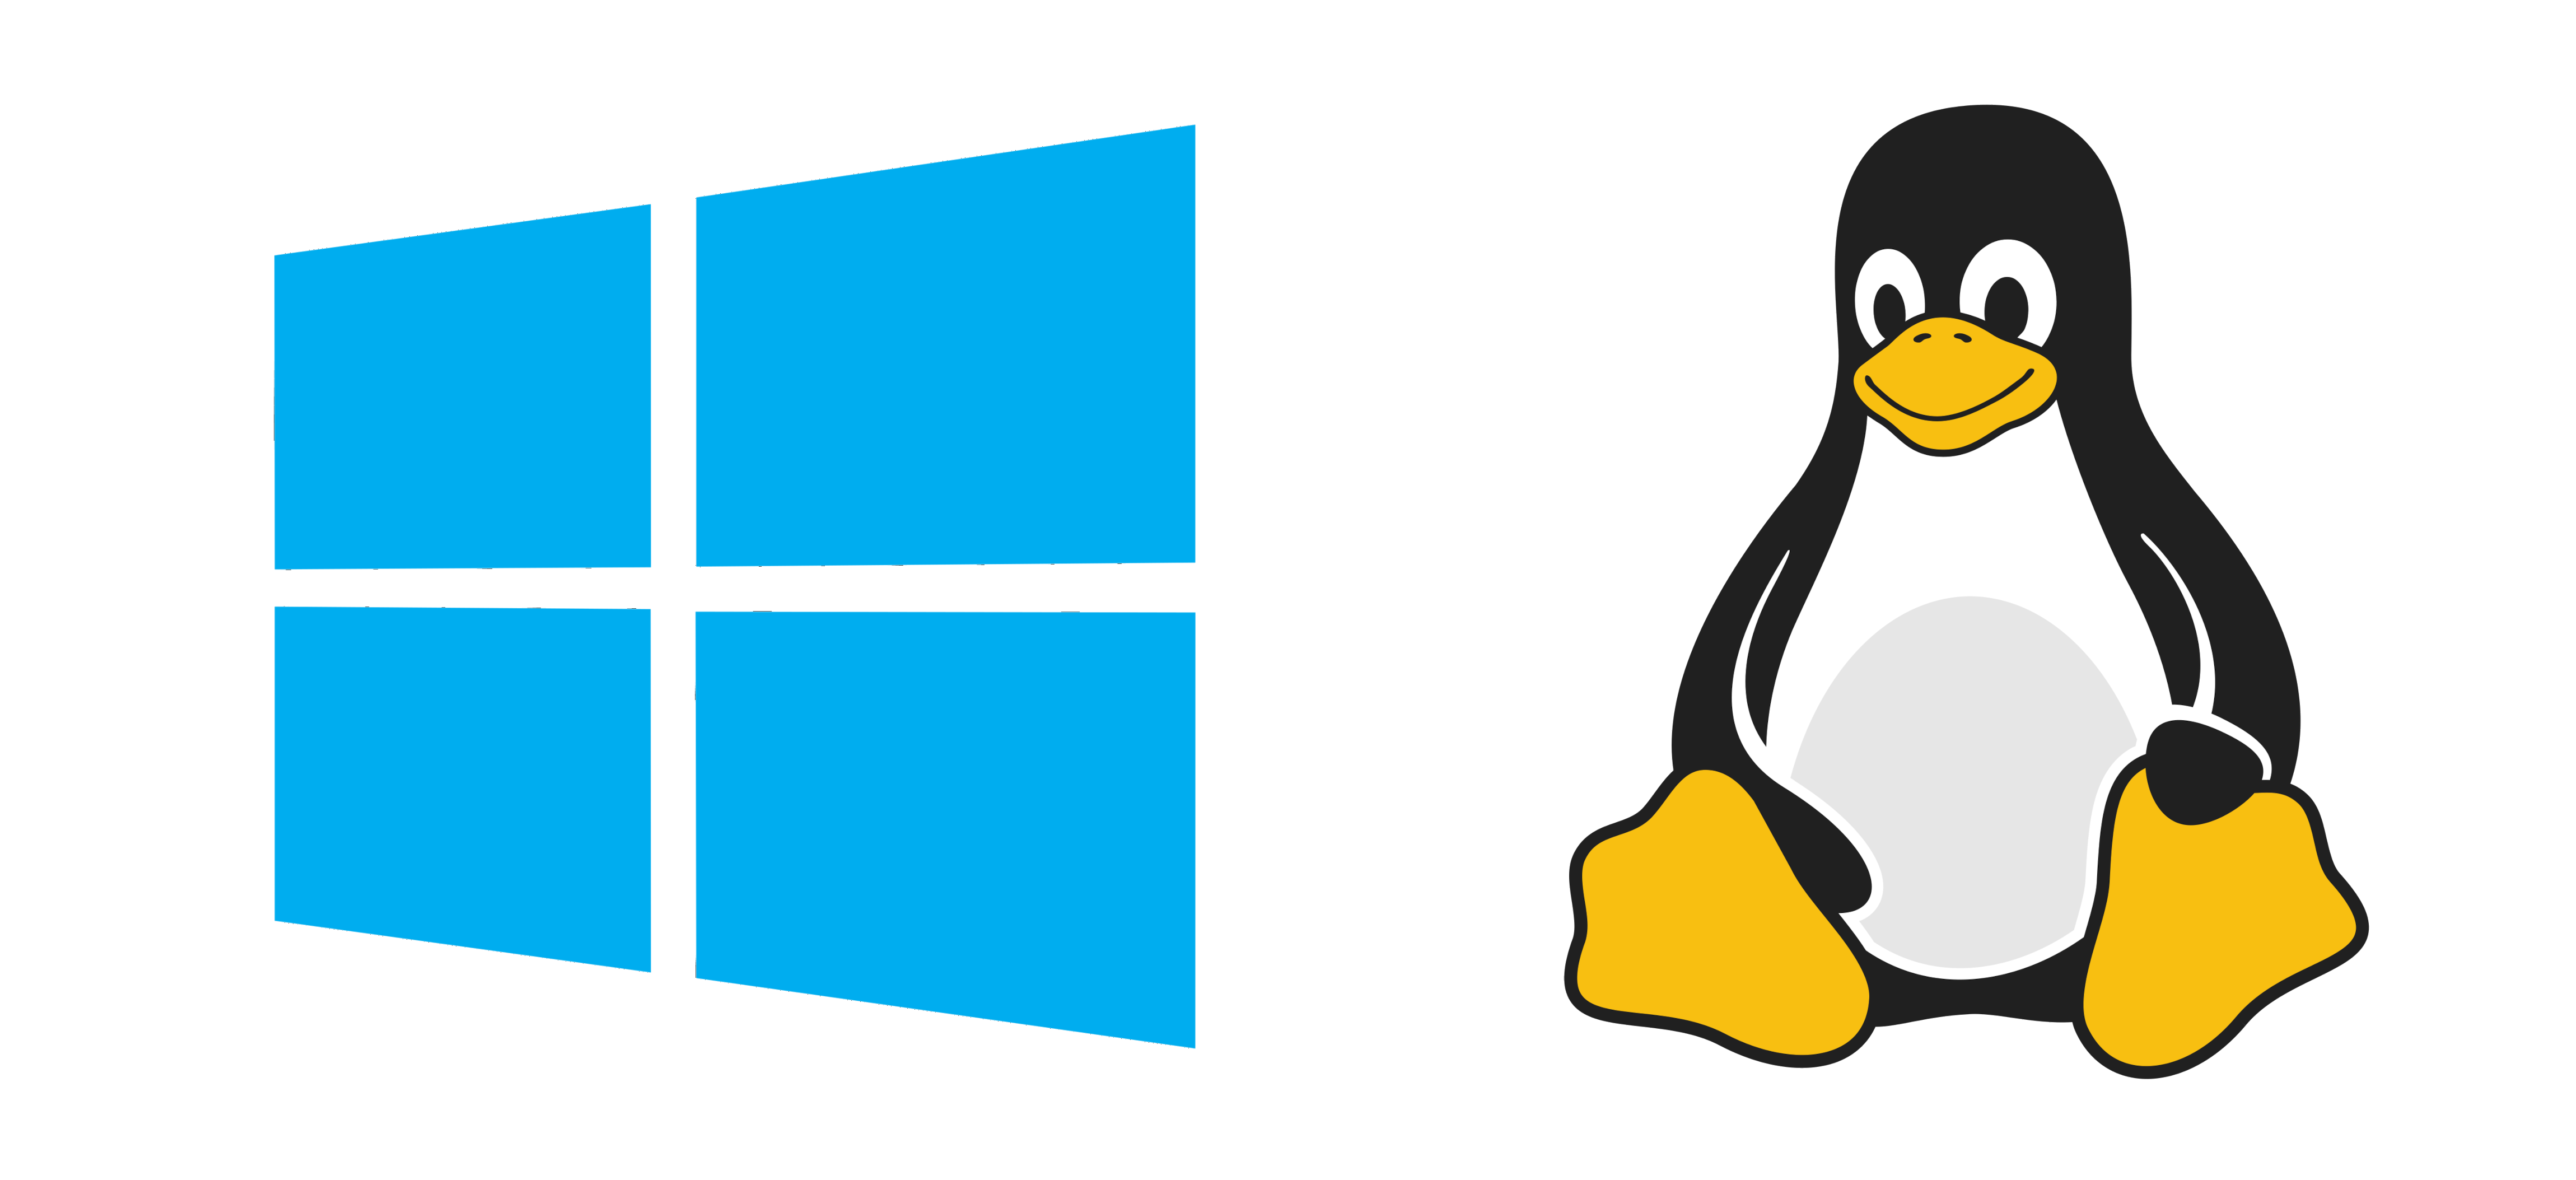 Windows Hosting Vs Linux Hosting - The Comparison